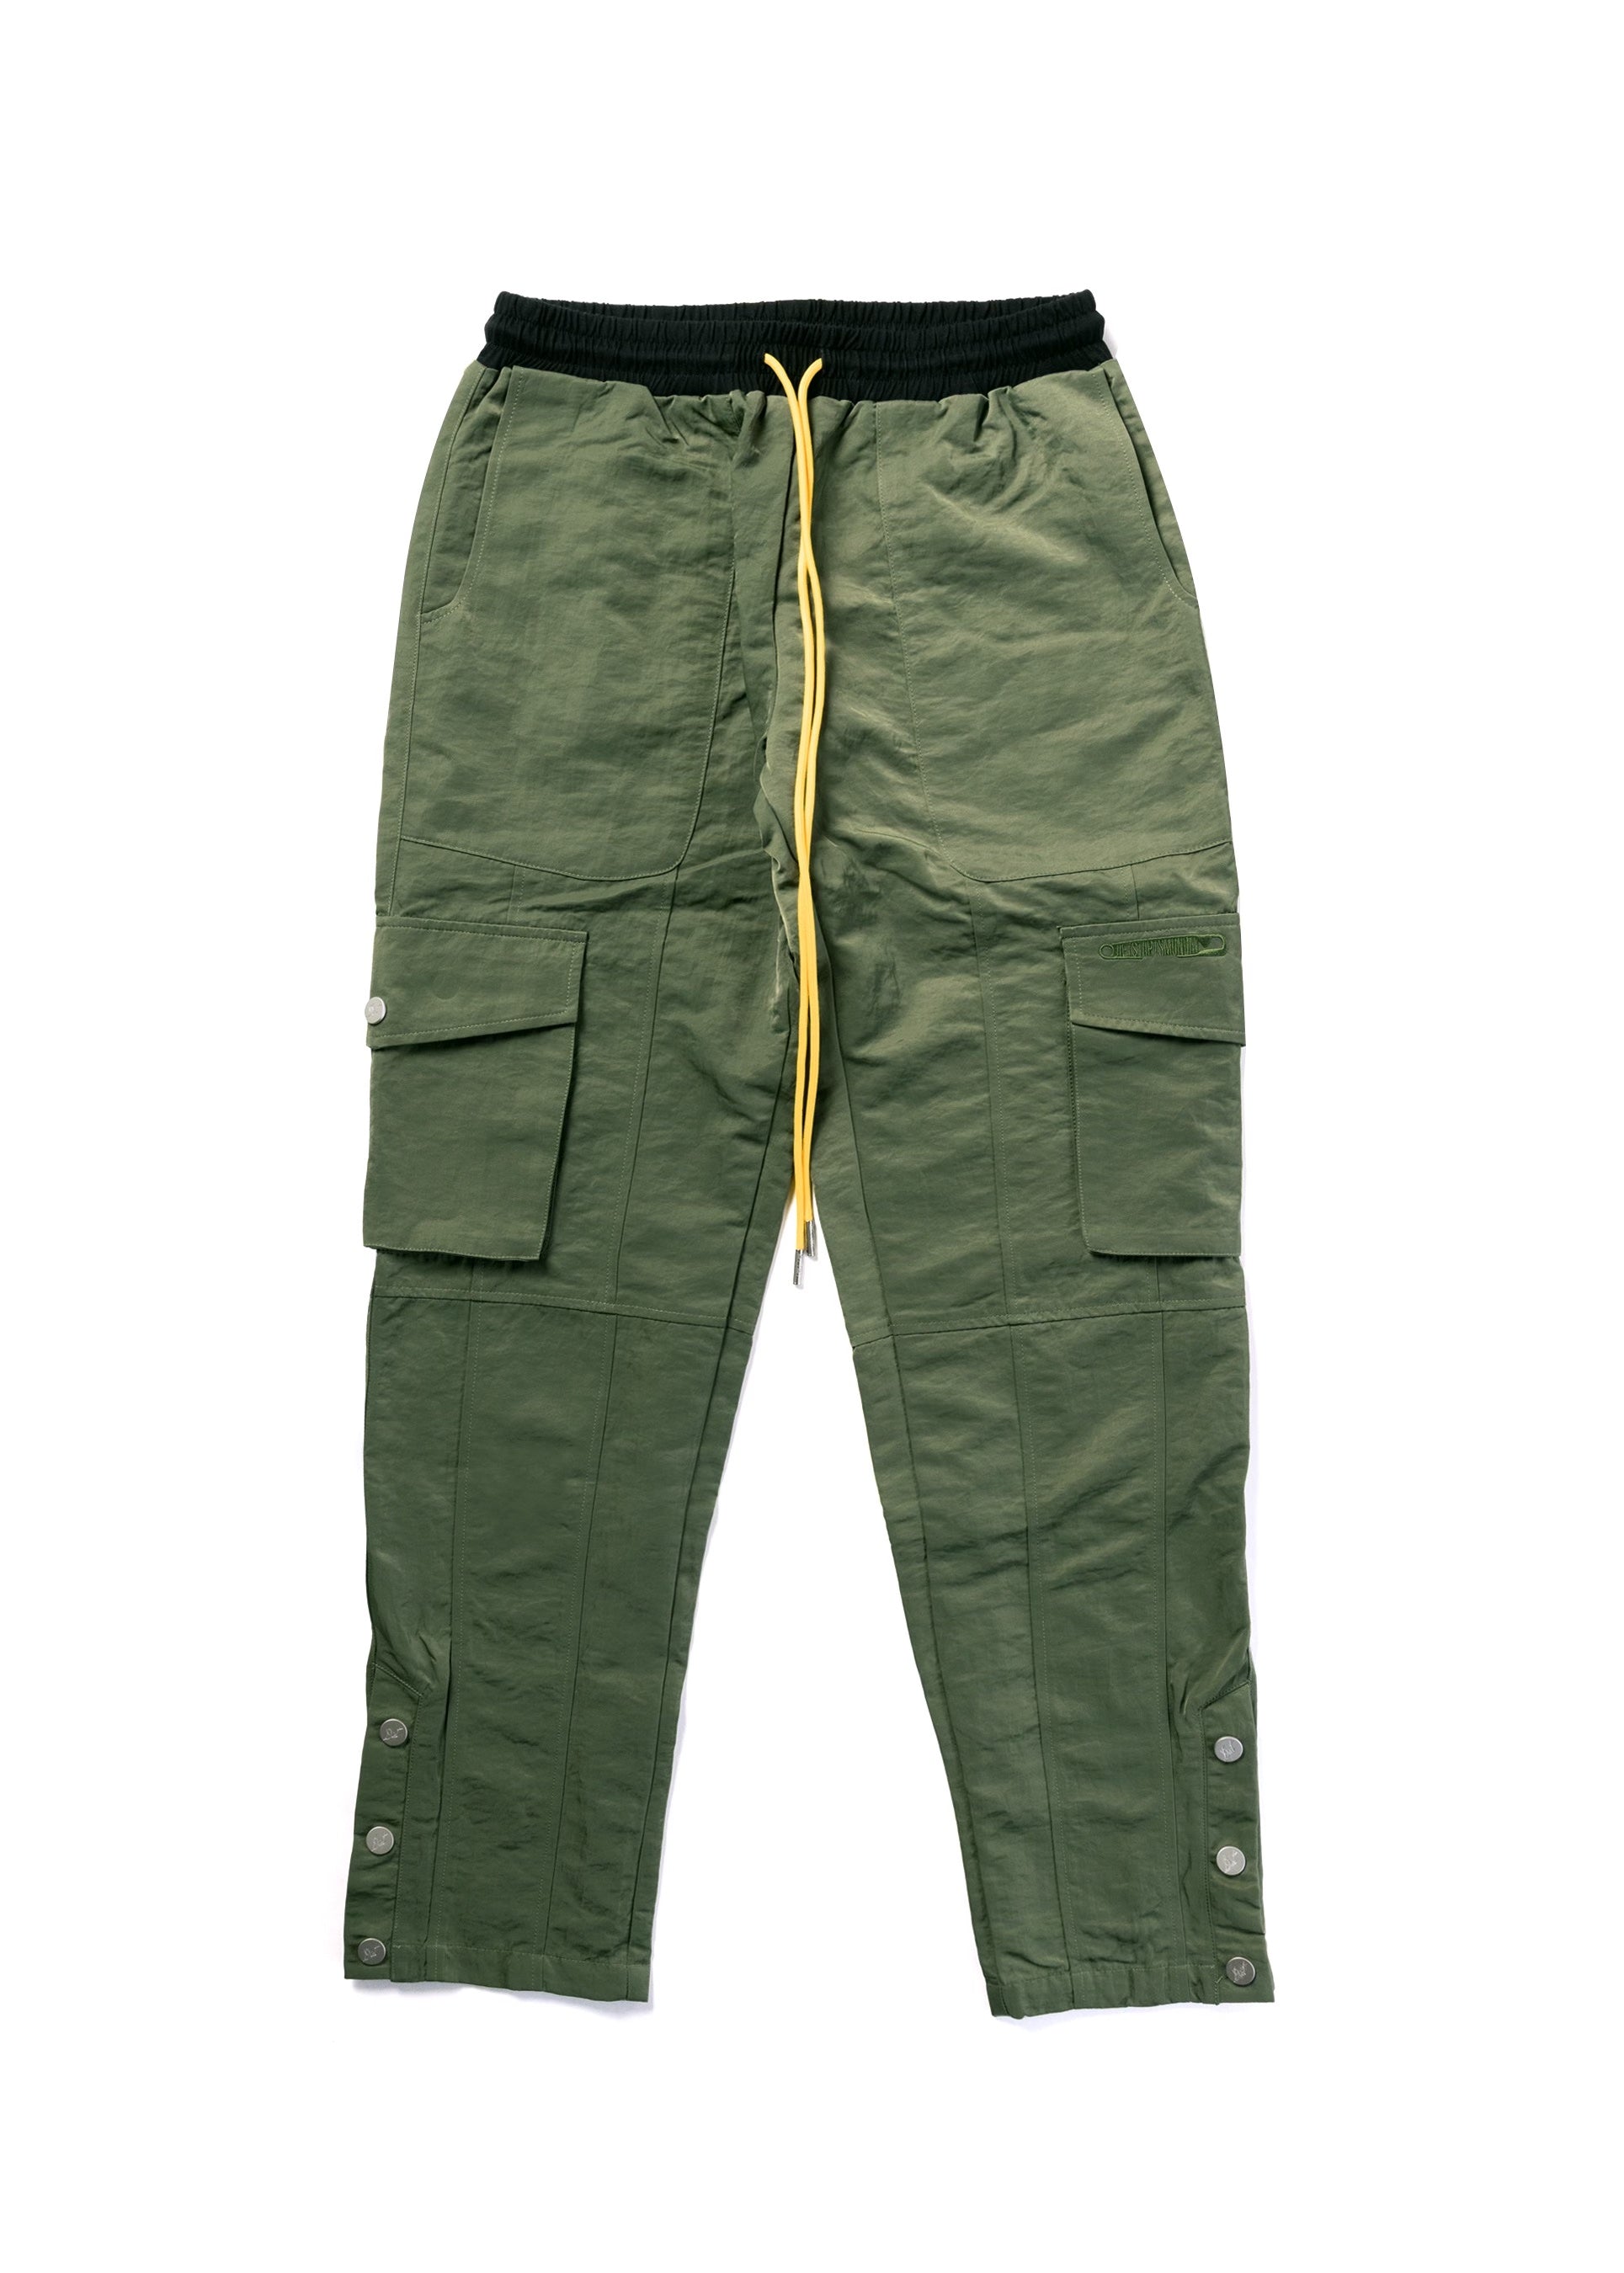 Celine Womens Cargo Pants Size 40 US8 Green Kaki Lightweight Nylon